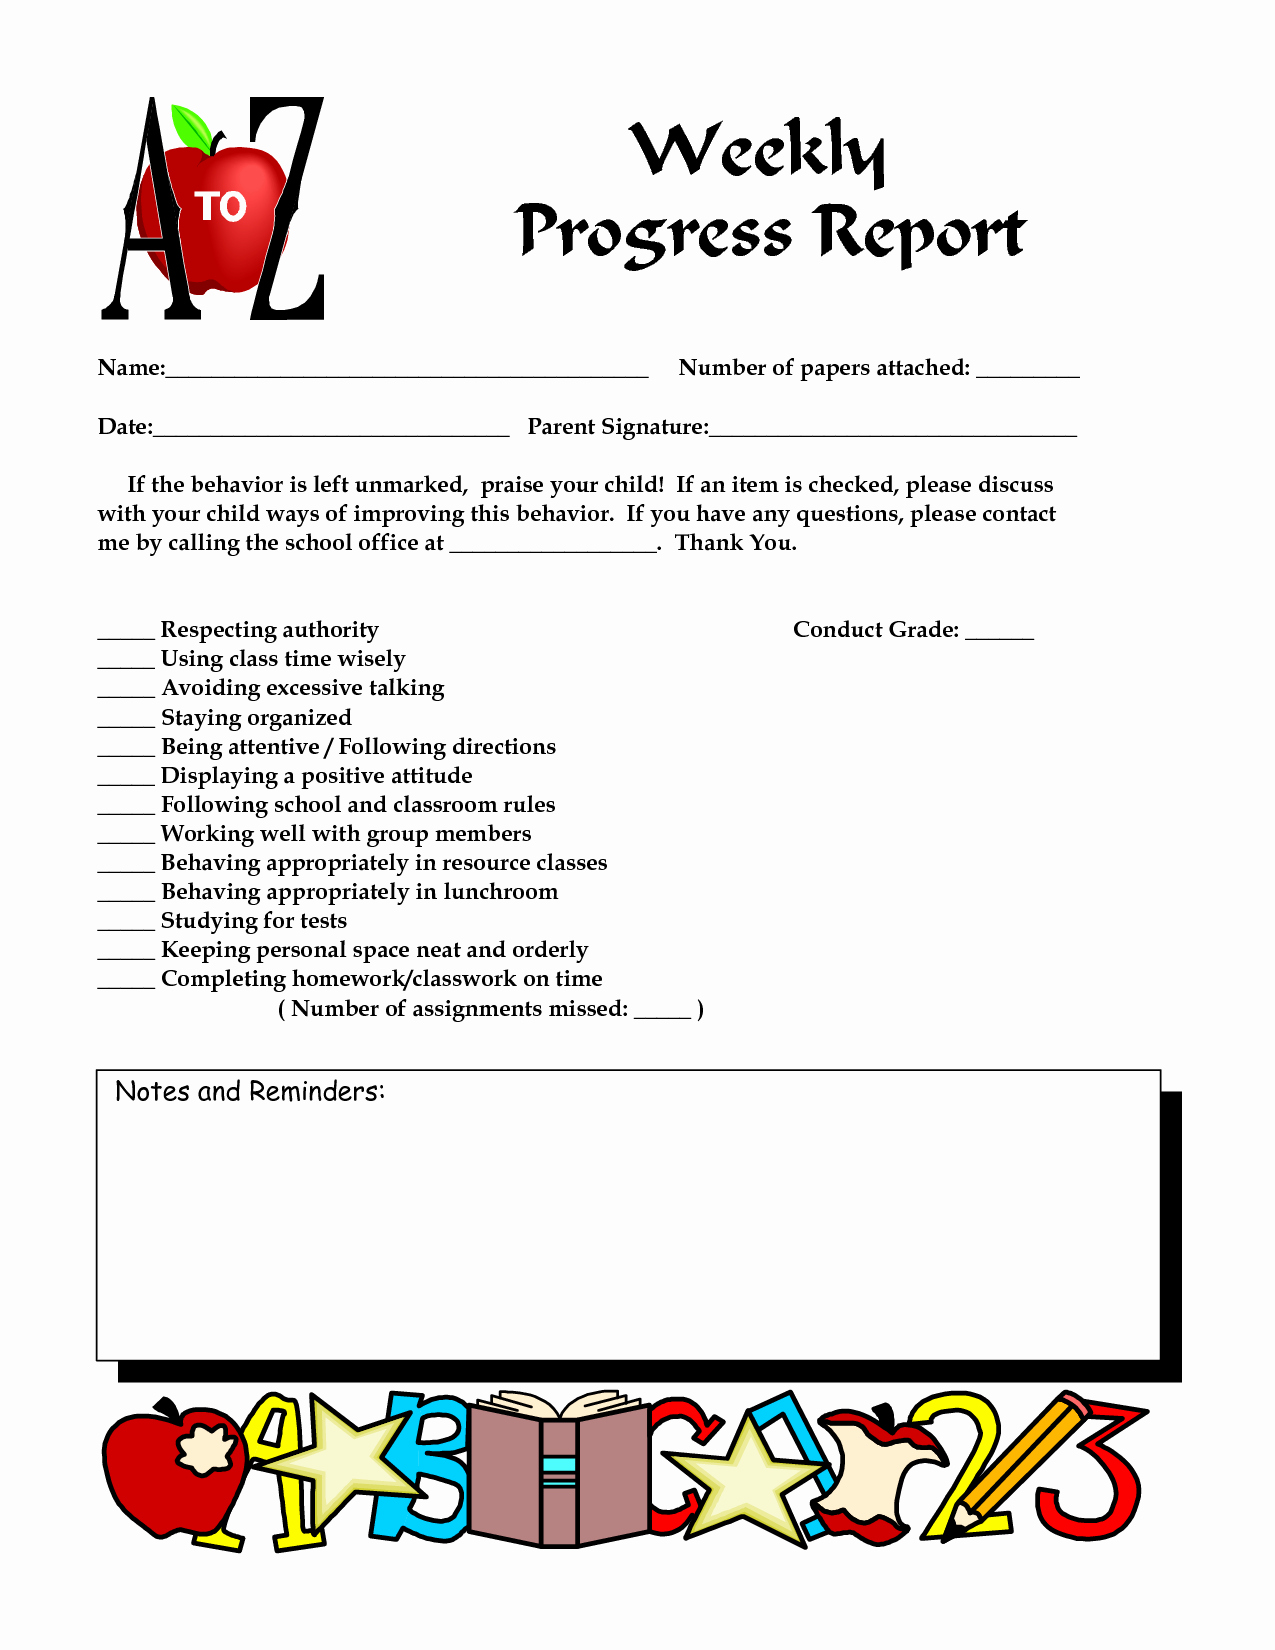 Elementary Progress Report Template Luxury 96 Weekly Progress Reports Elementary Weekly Progress